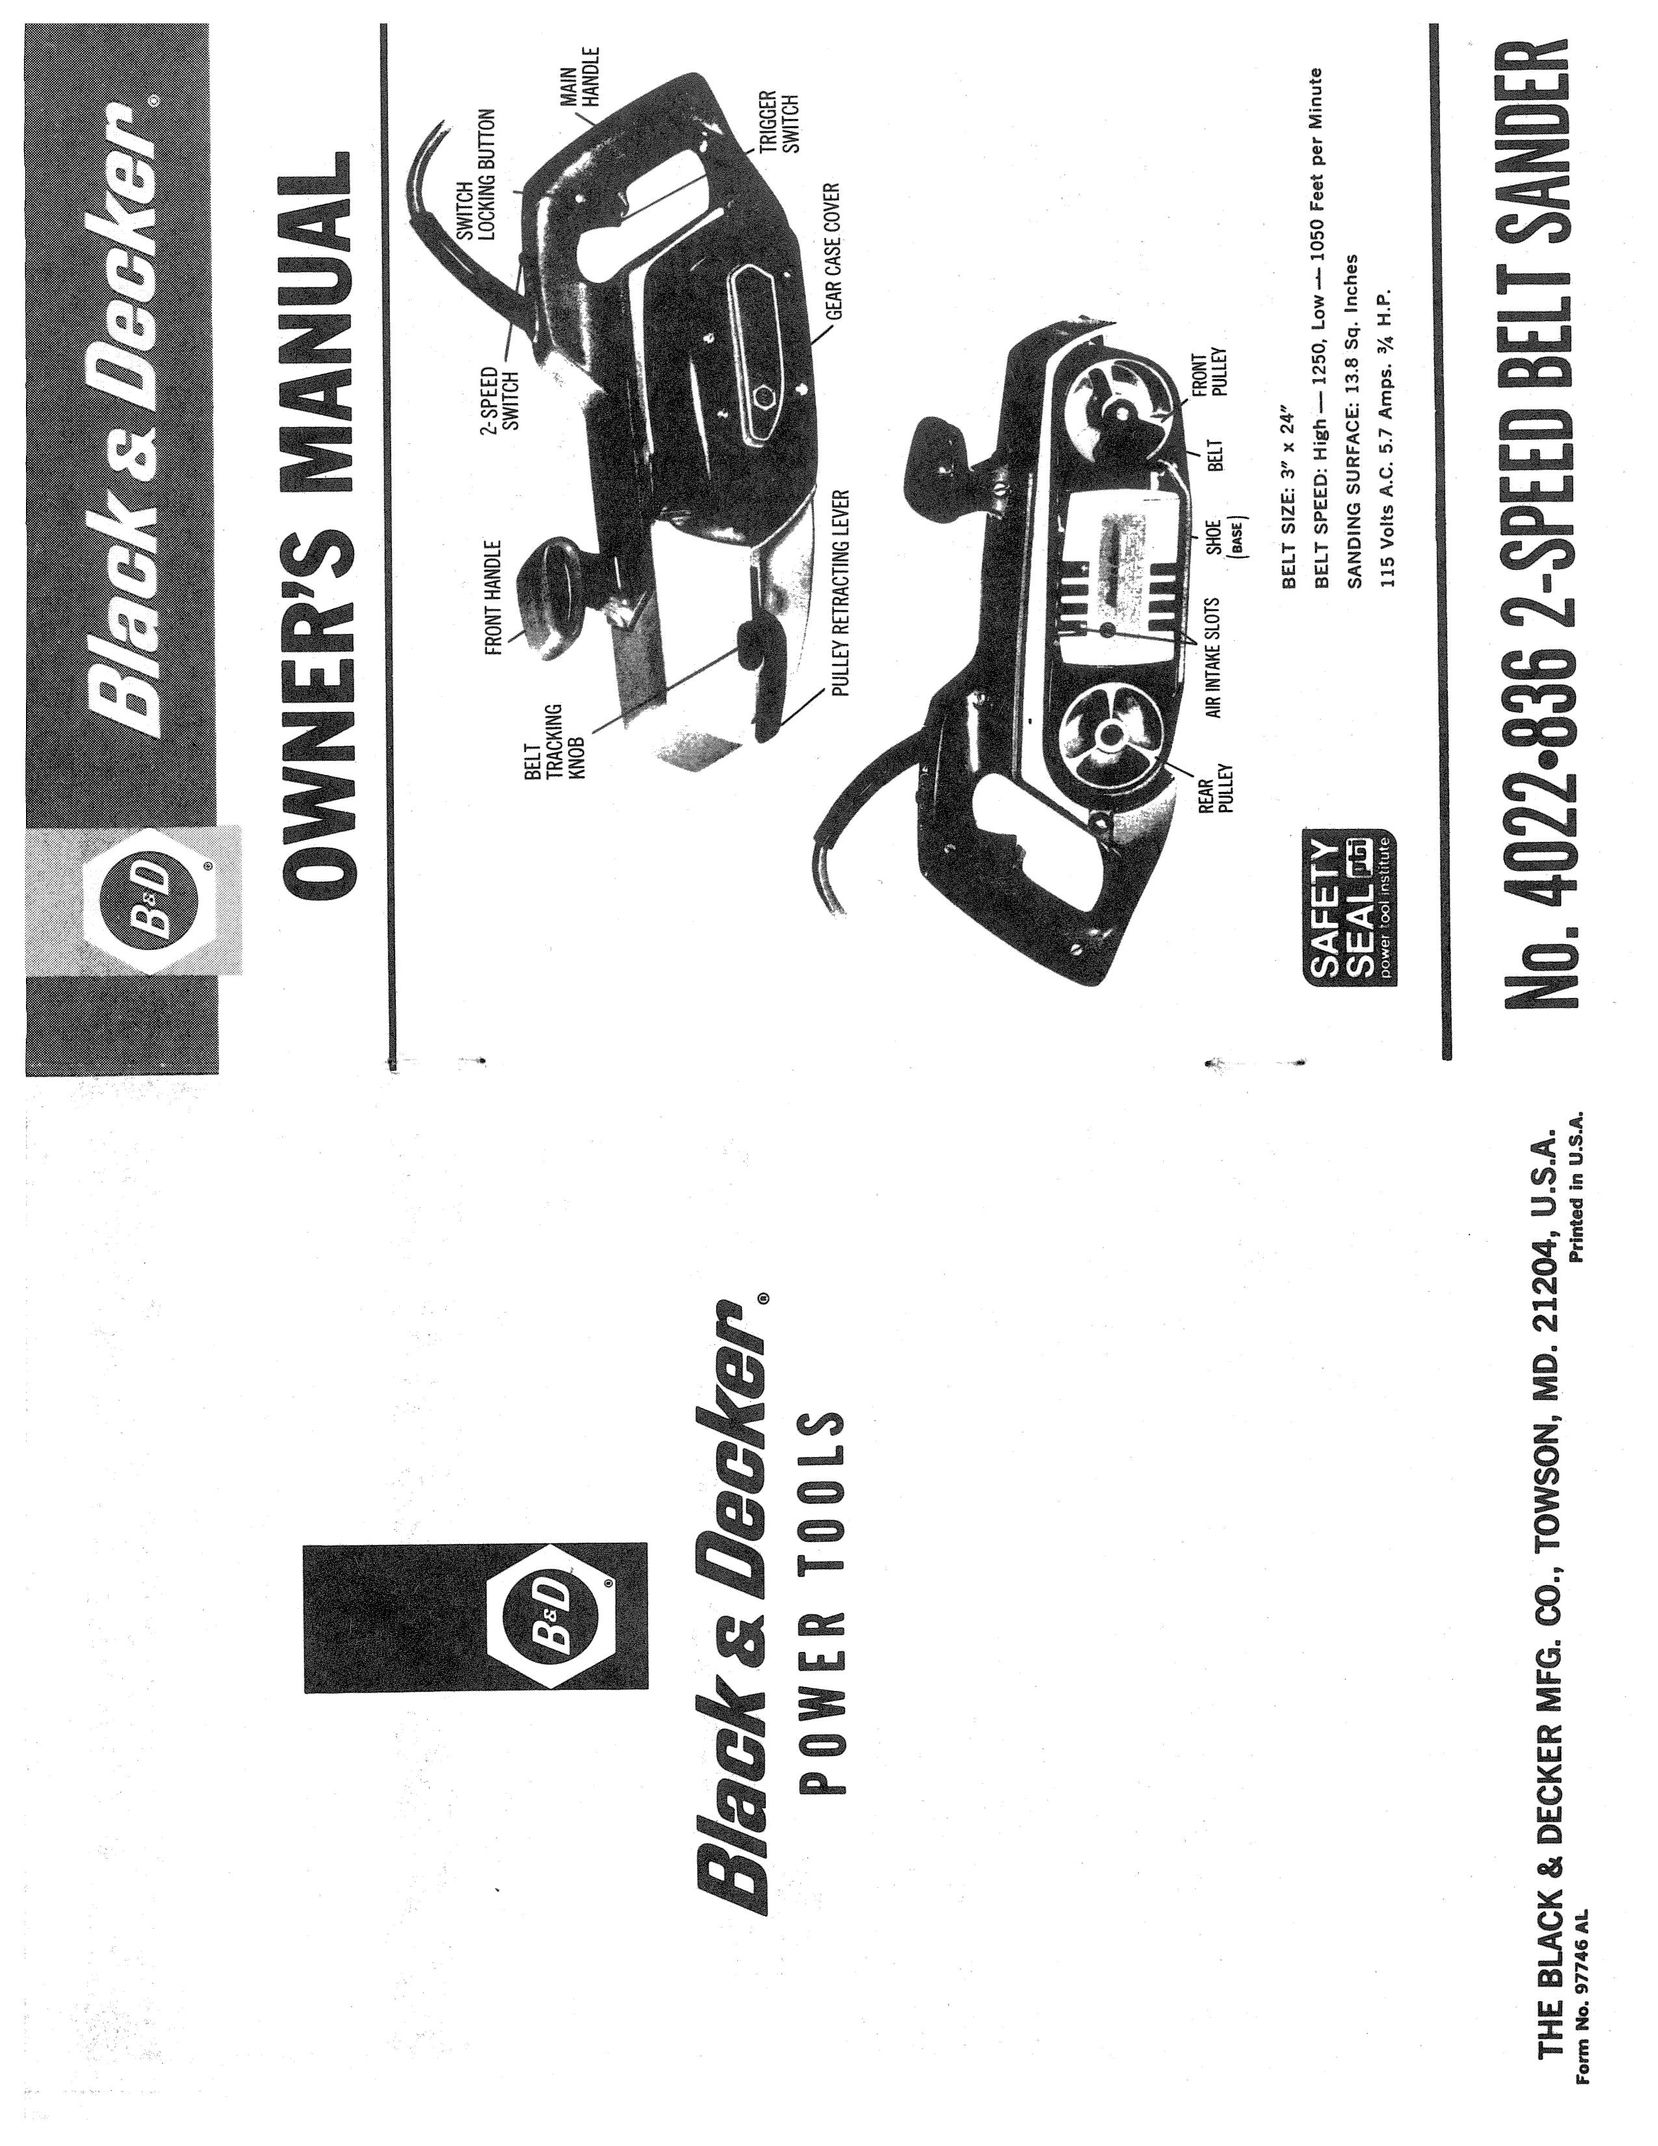 Black & Decker 4022-836 Sander User Manual